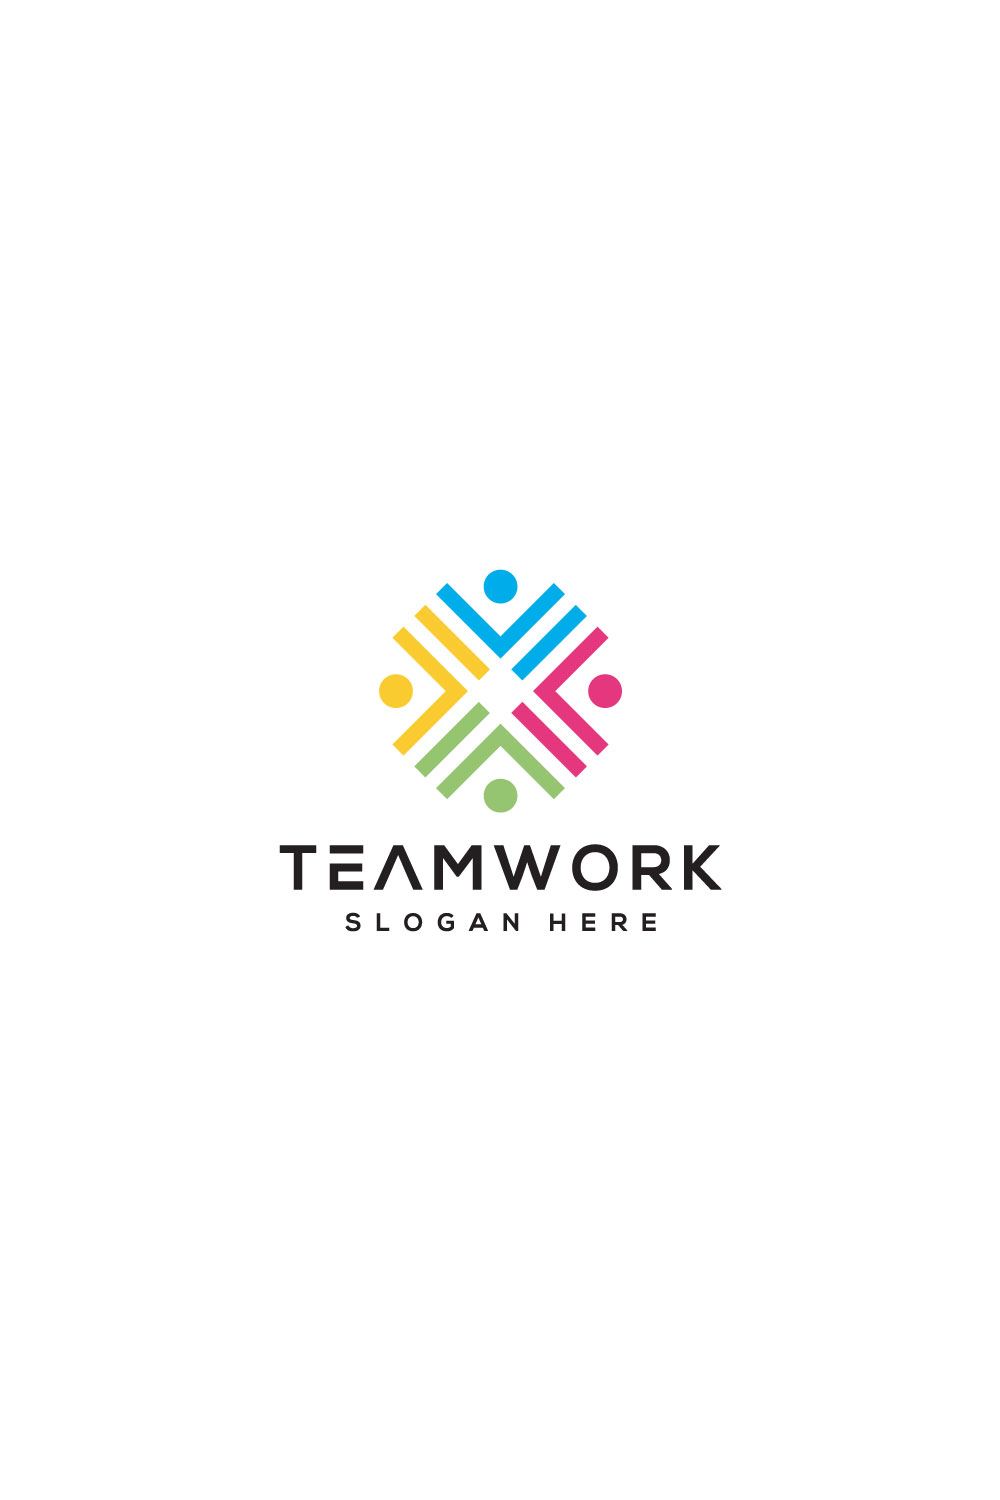 Teamwork Community Logo Vector Design - Pinterest.